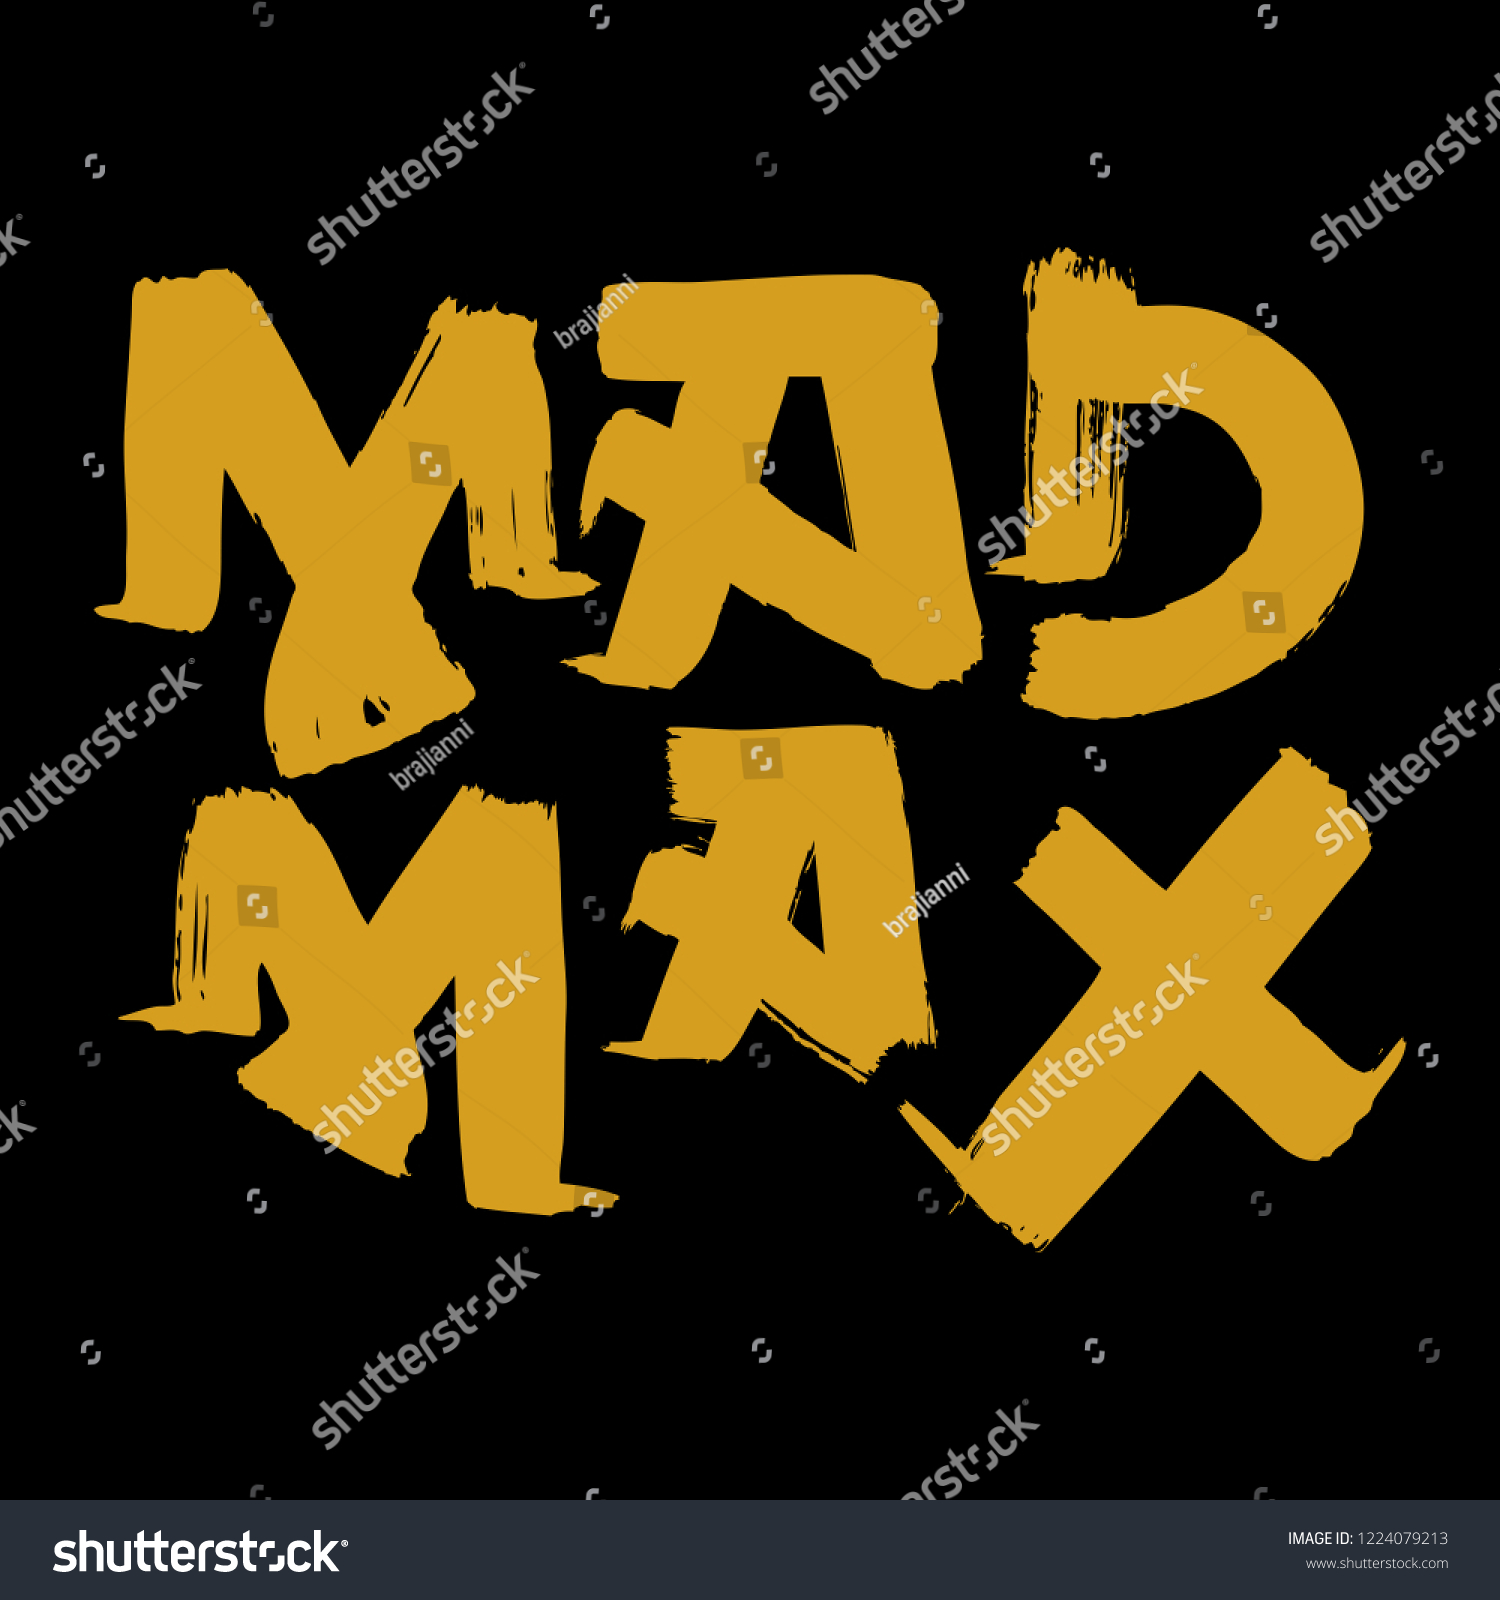 Mad Max Stock Vectors Images Vector Art Shutterstock